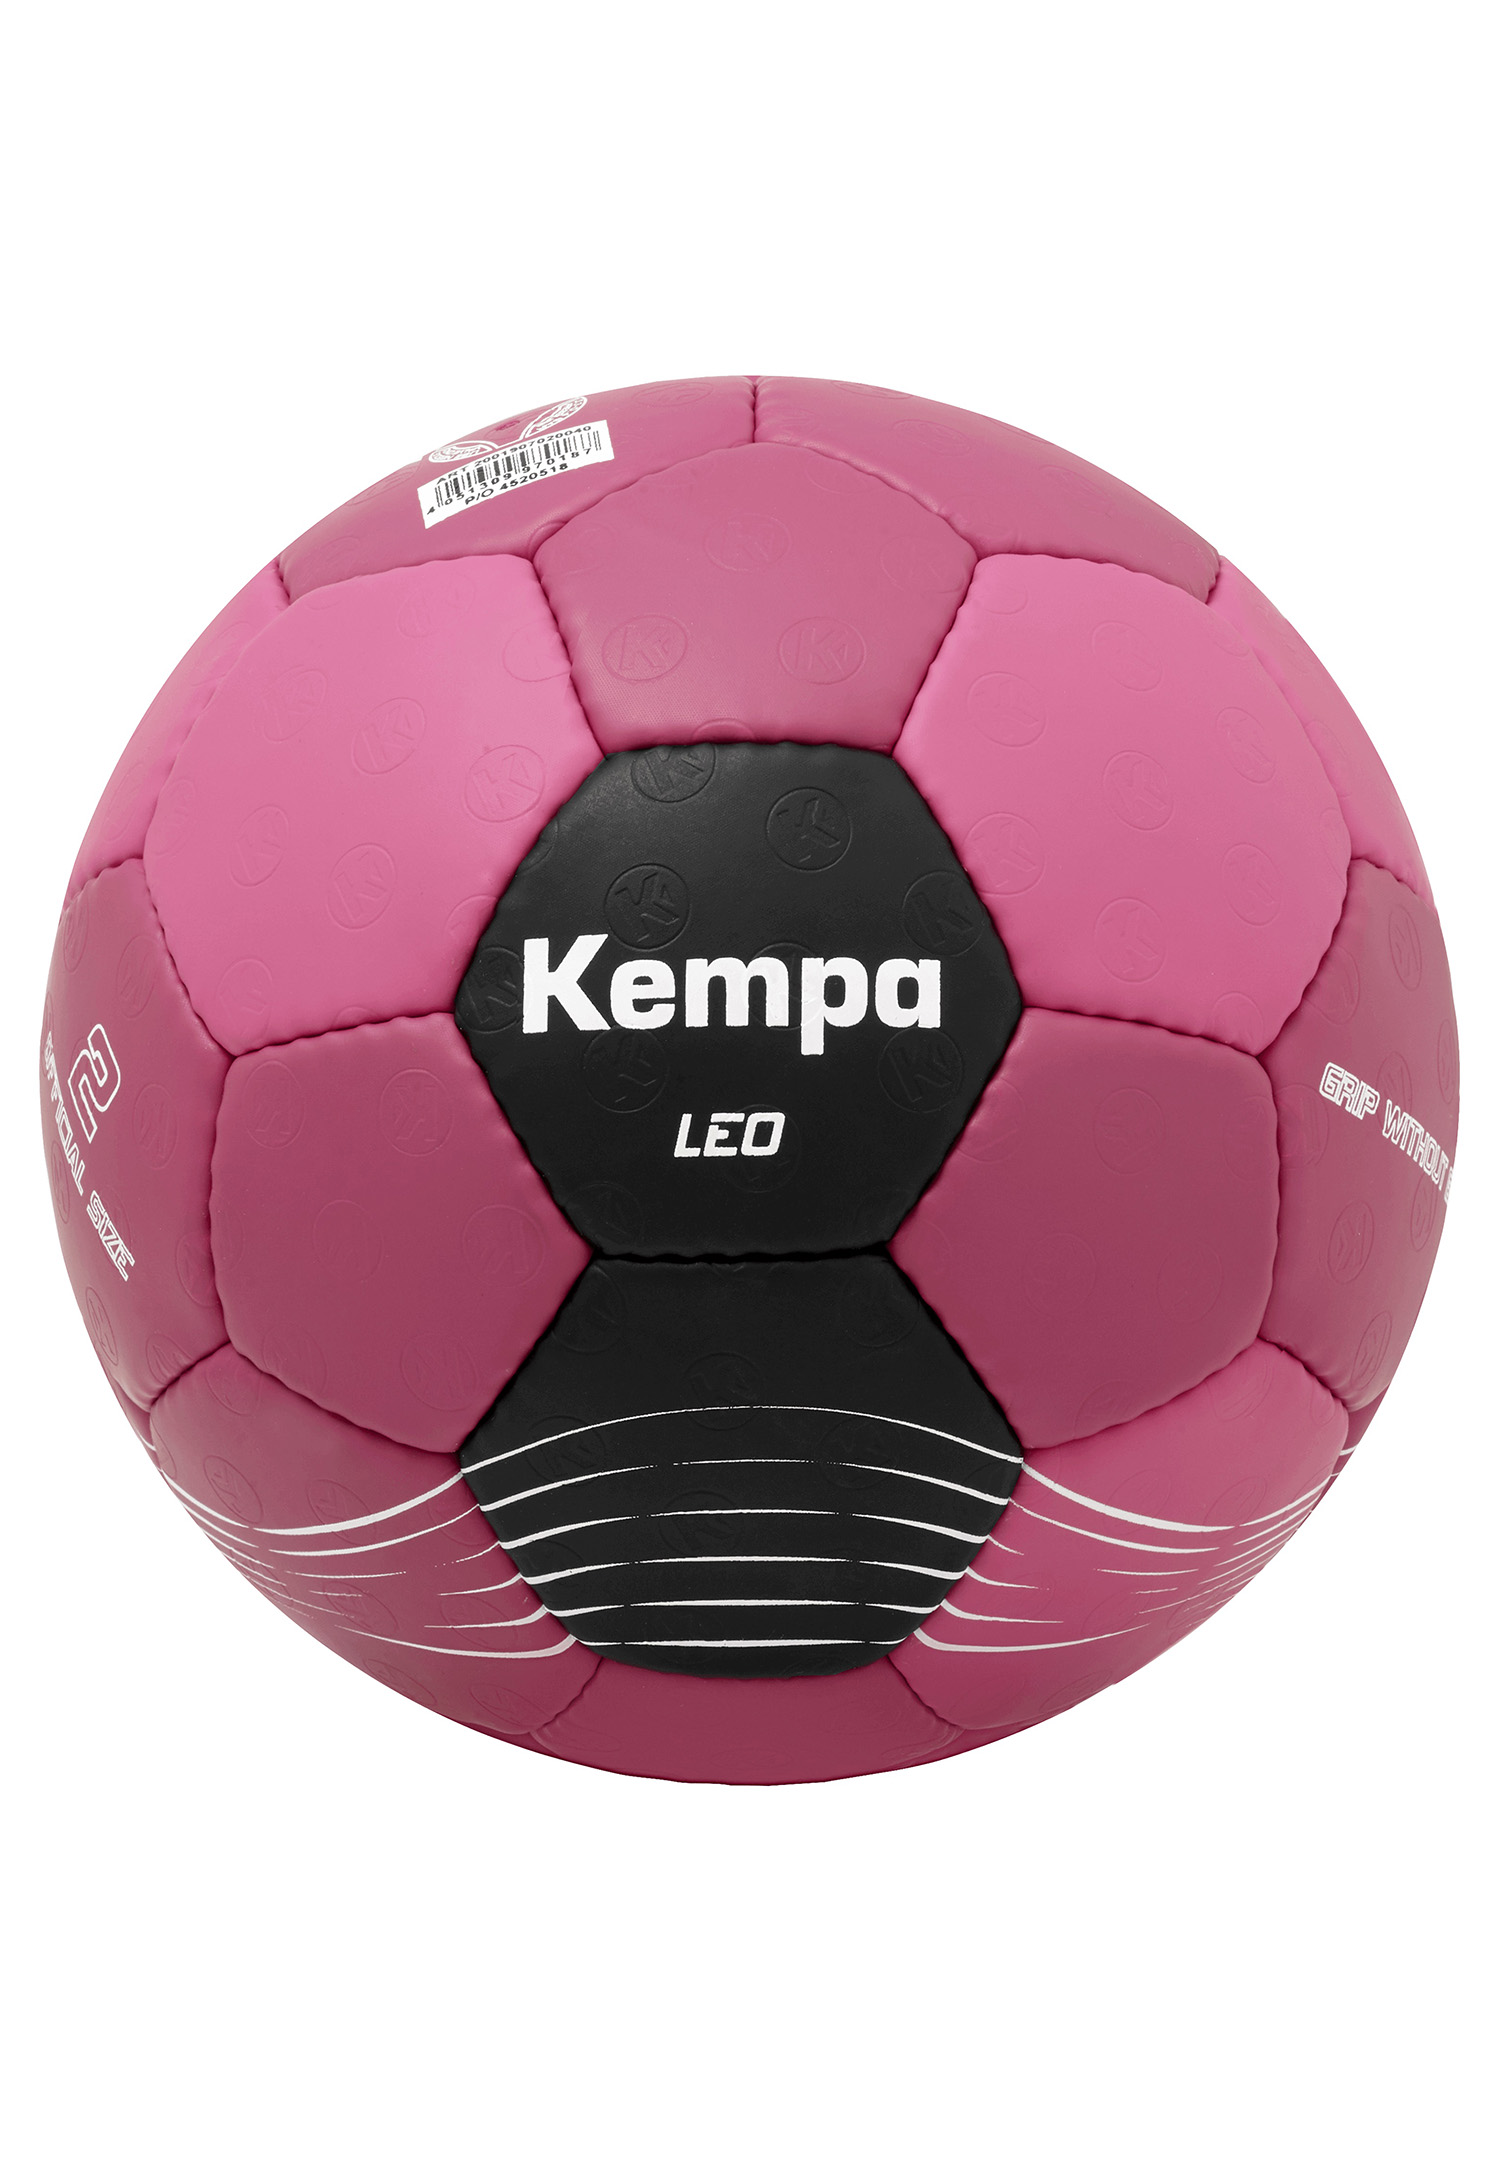 Kempa Handball Leo Size 0 200190702 burgundy/black